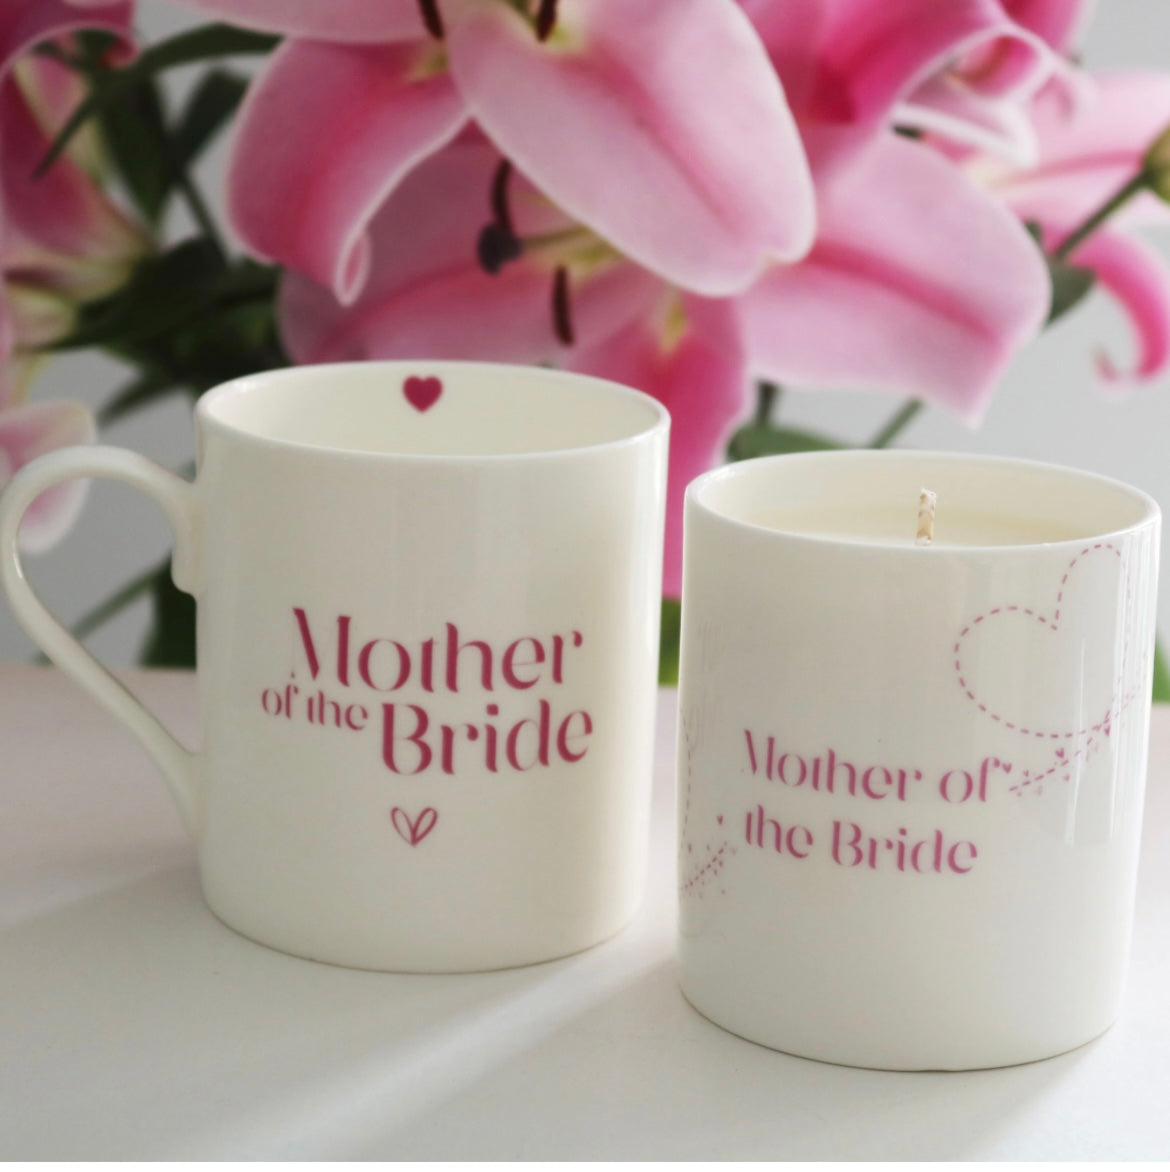 Mother of the Bride Mug & Candle Gift set